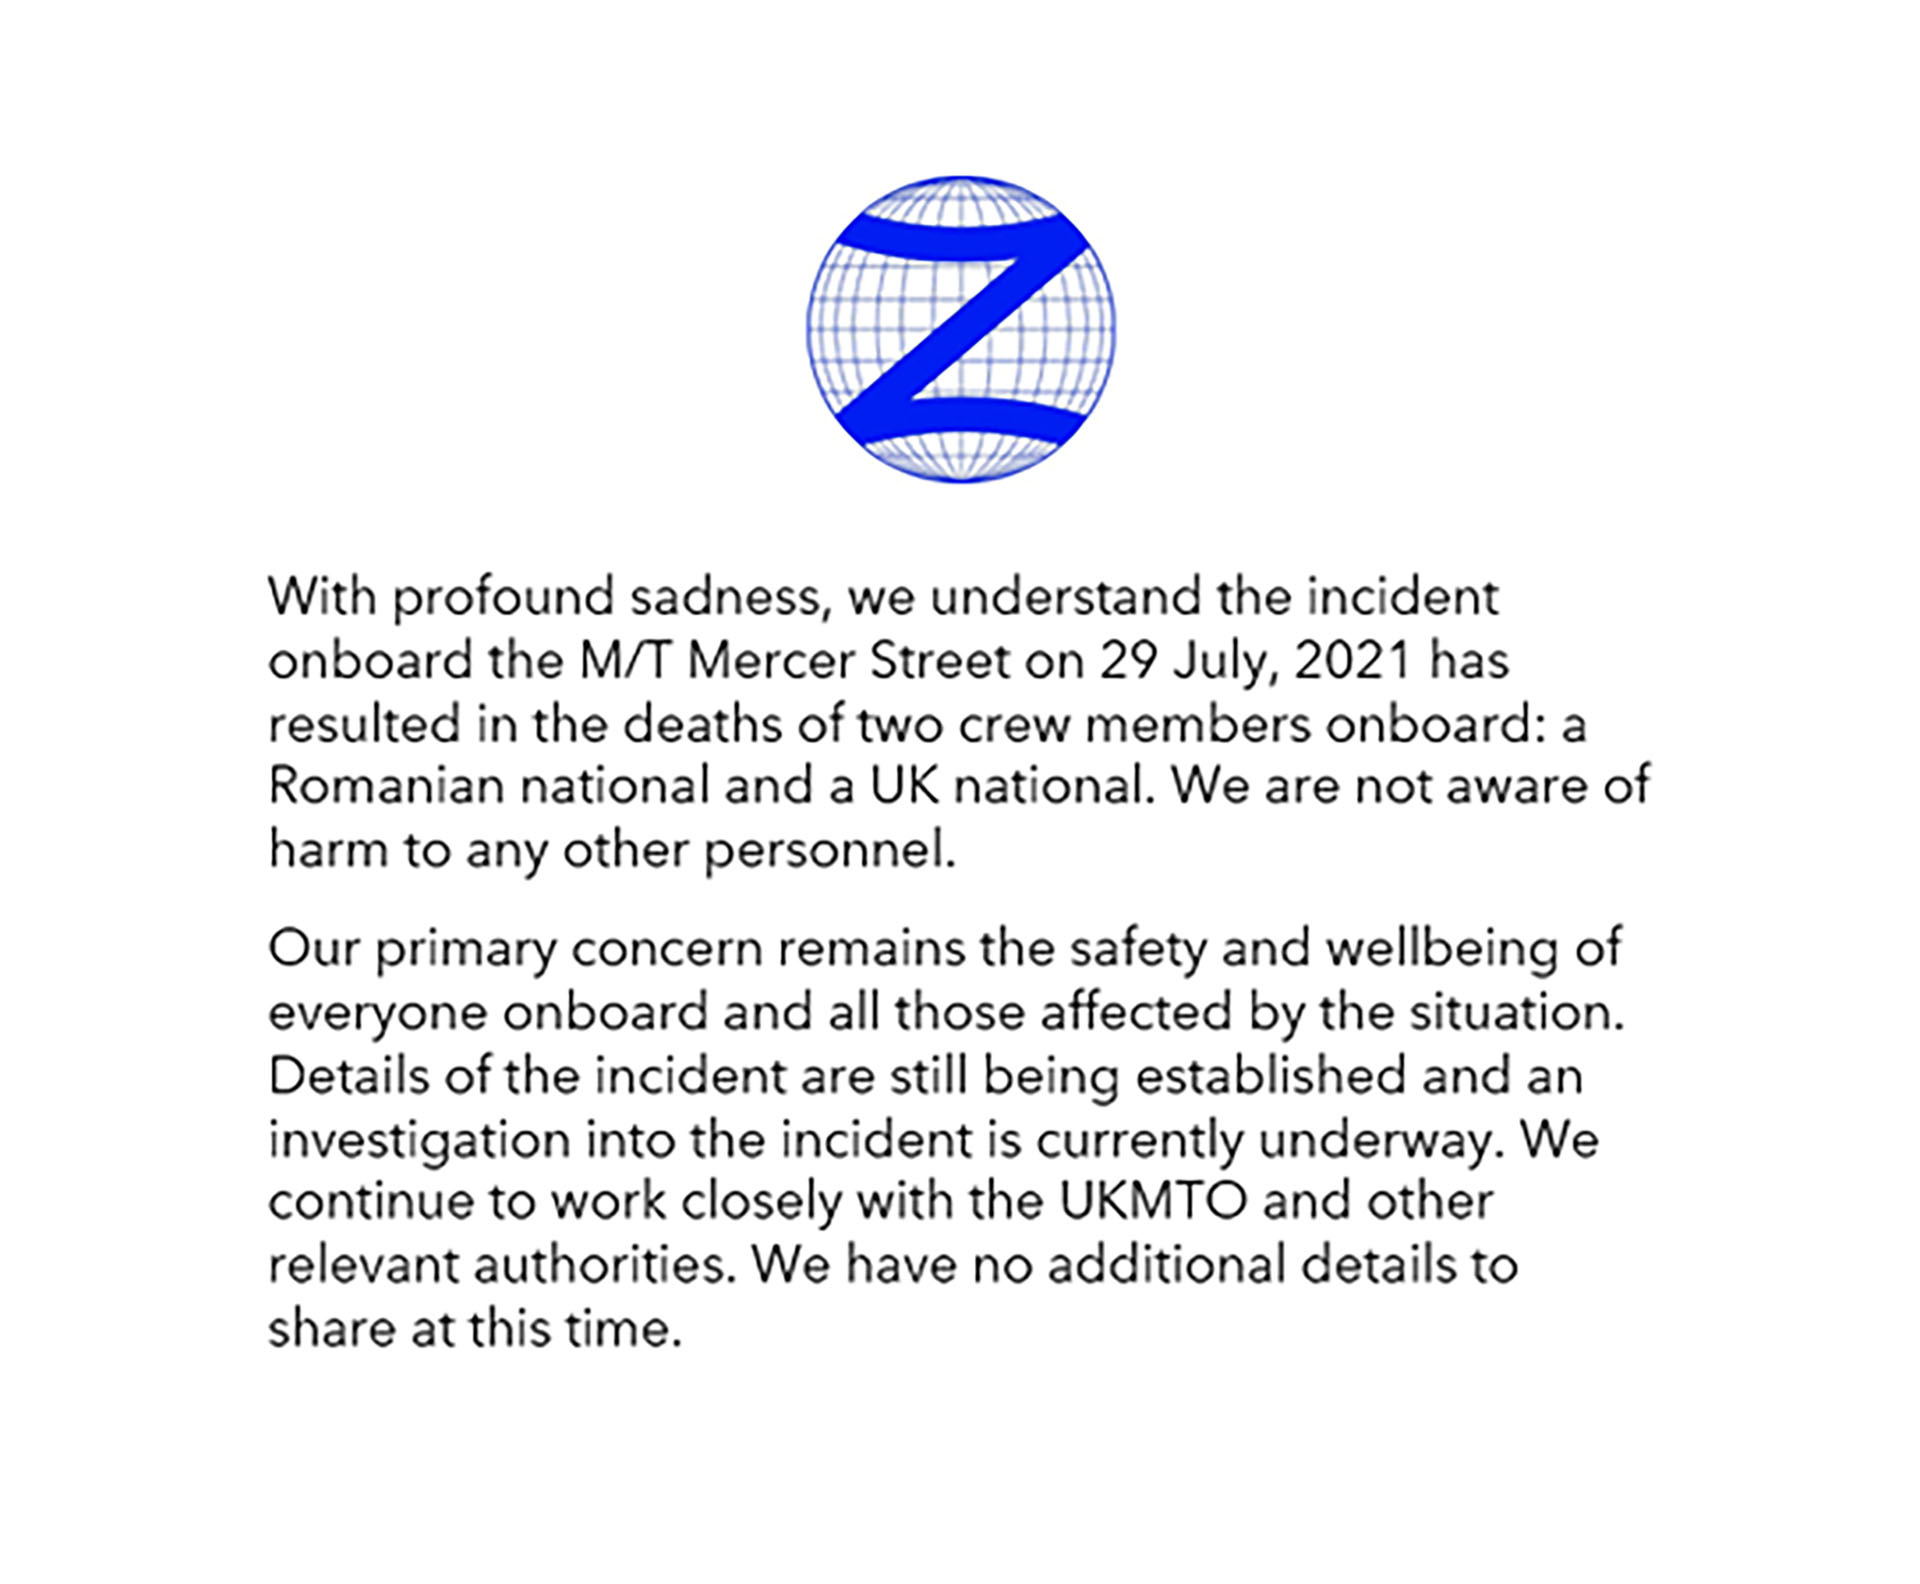 El comunicado de Zodiac en el que lamenta la muerte de dos tripulantes del MT Mercer Street durante el ataque